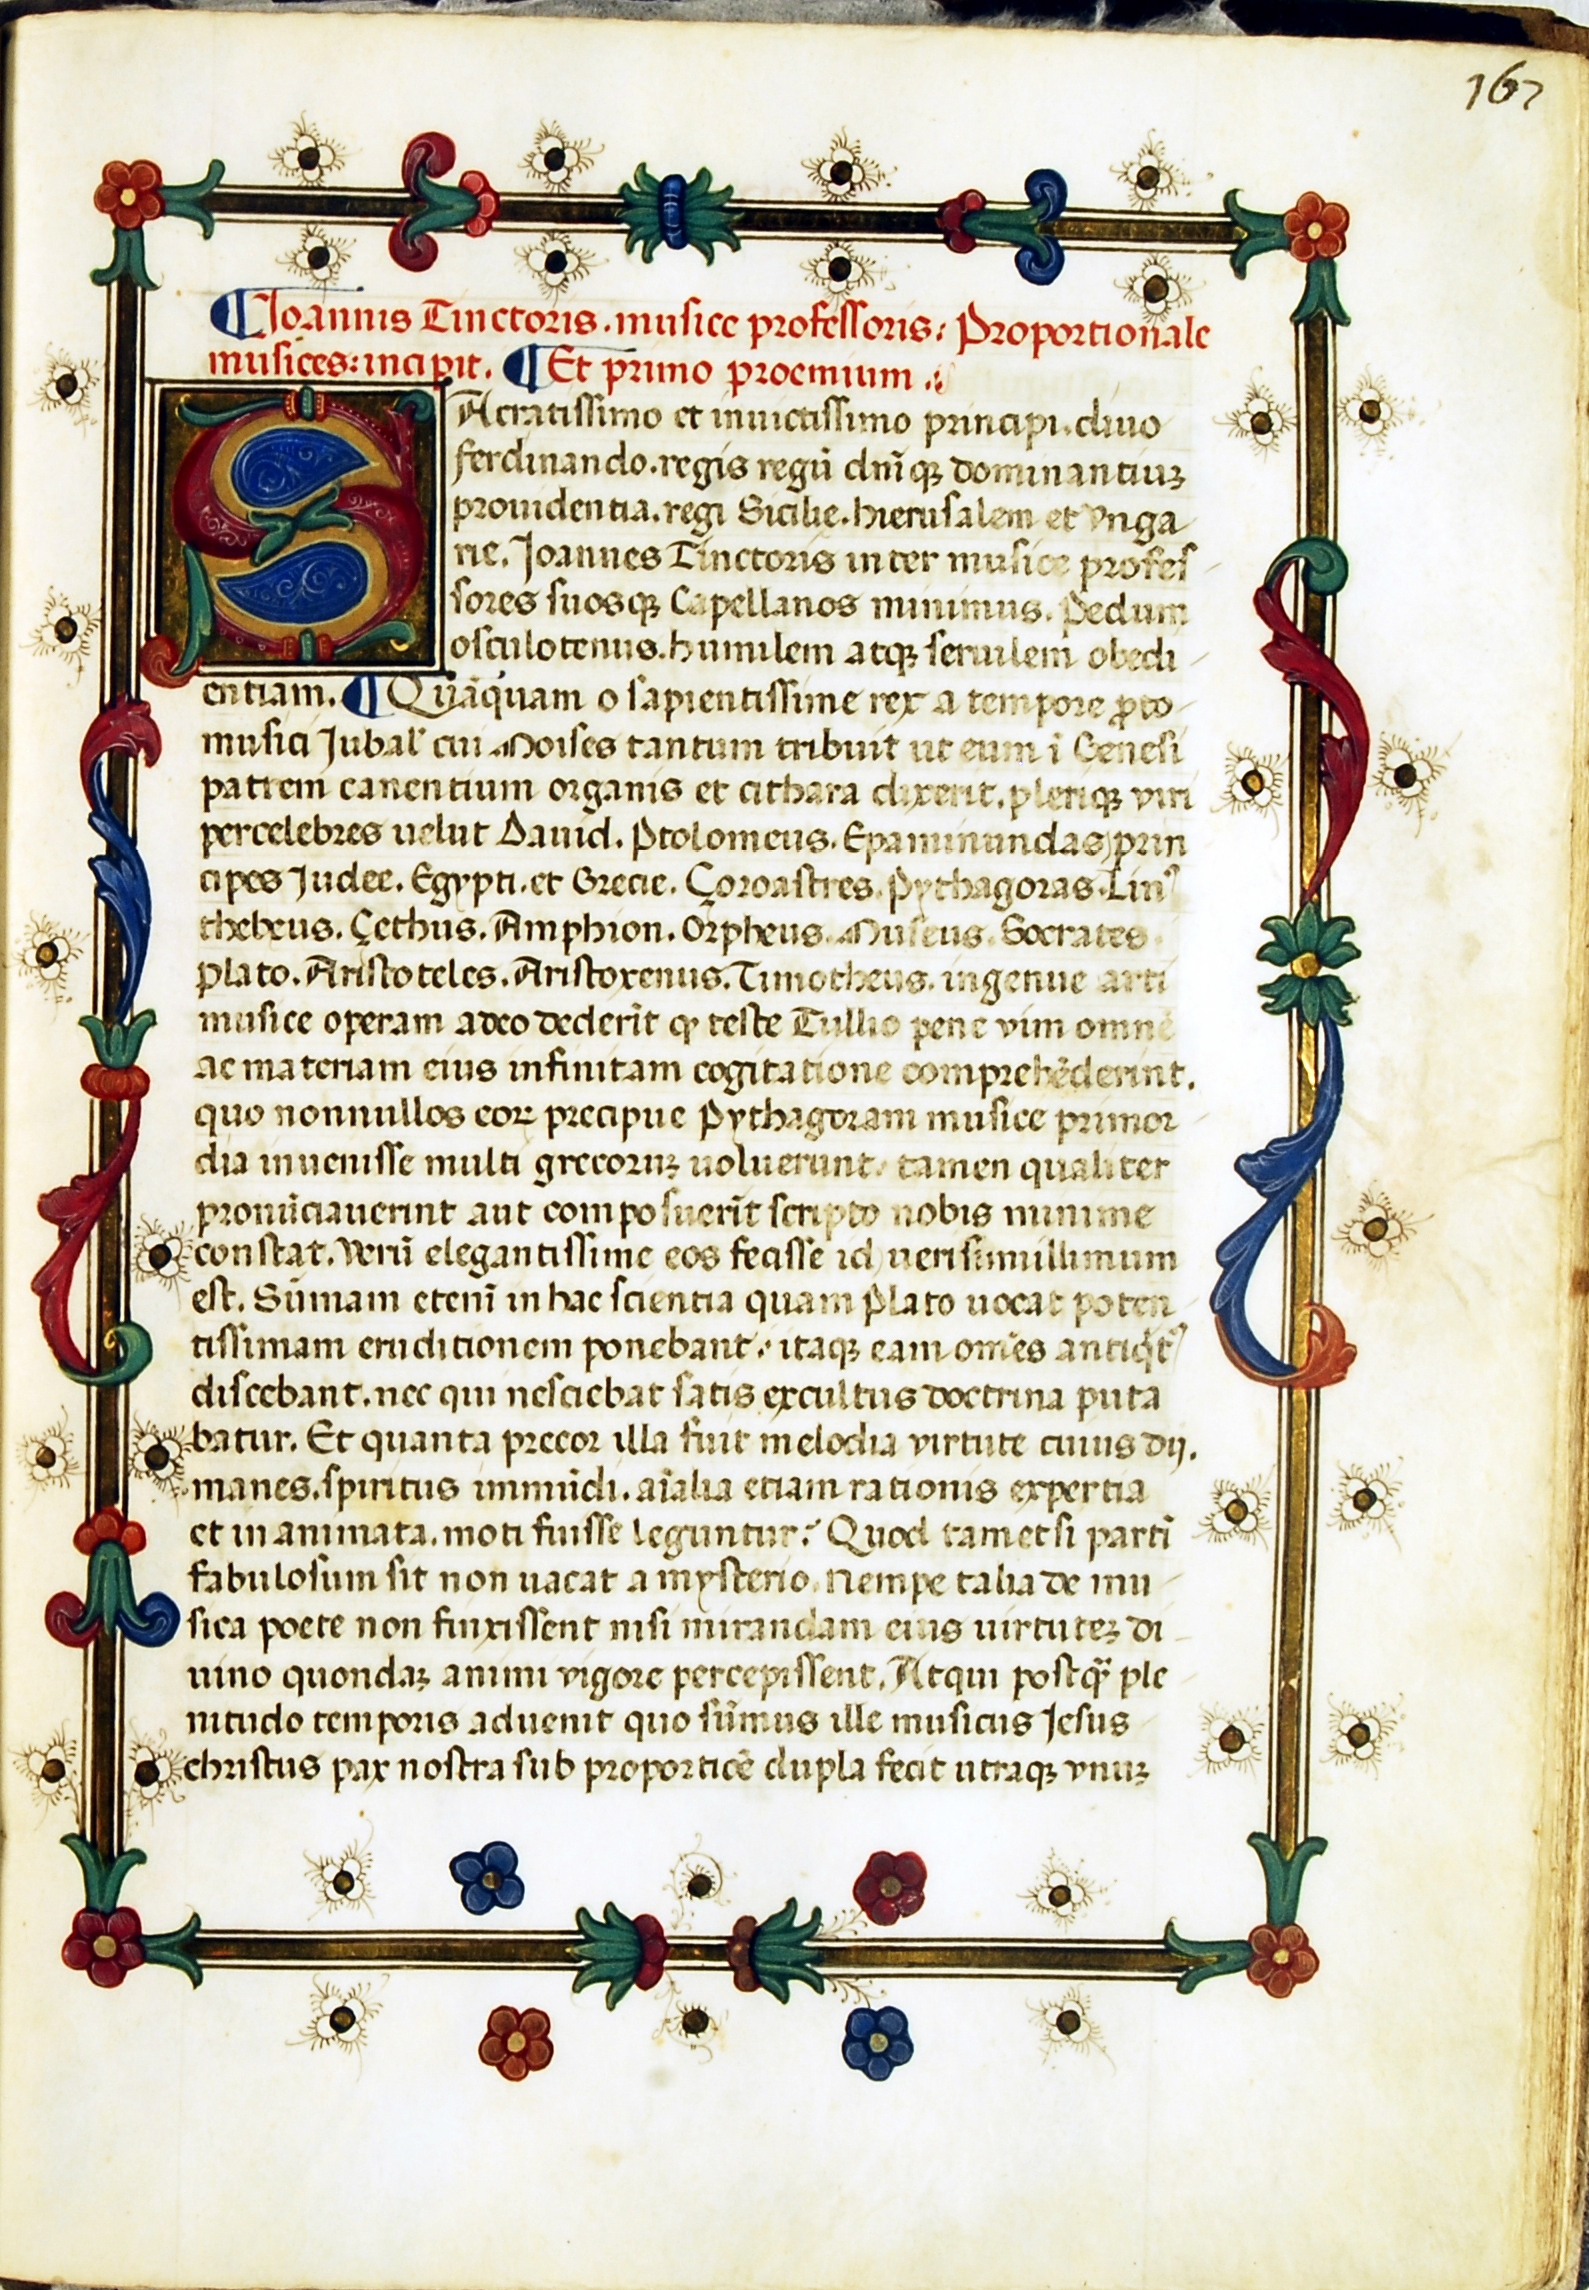 Bologna, Biblioteca Universitaria, MS 2573, fol. 167r. Source: Biblioteca Universitaria, Bologna.